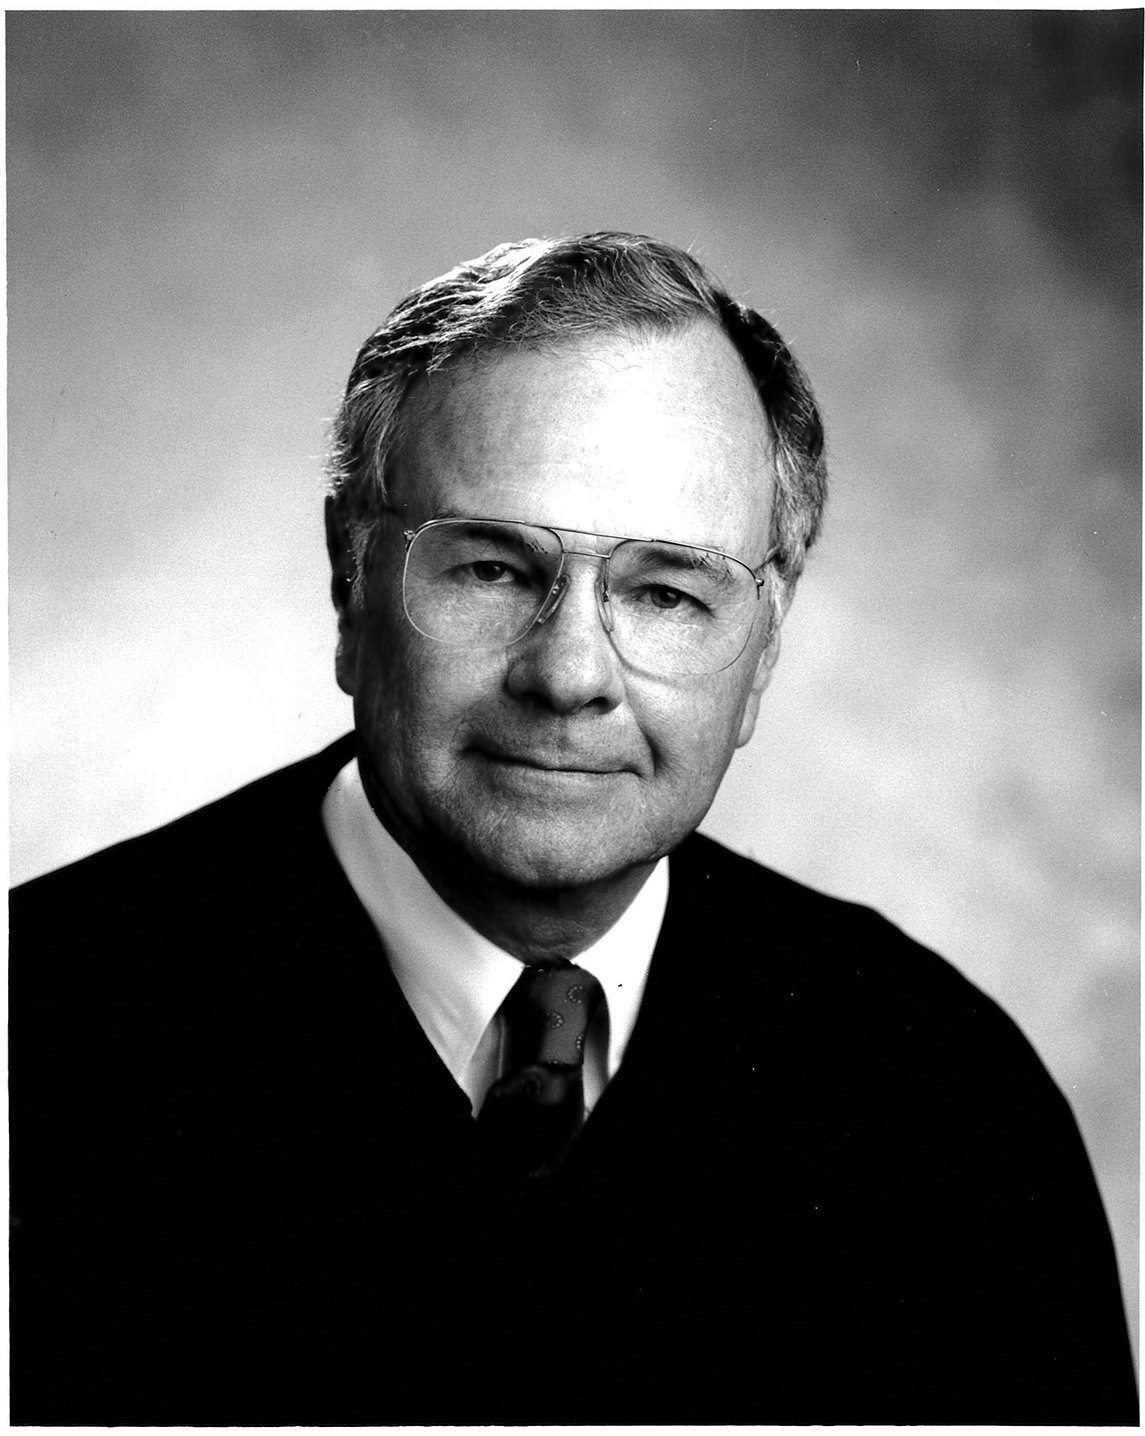 Associate Justice Pike Hall, Jr.